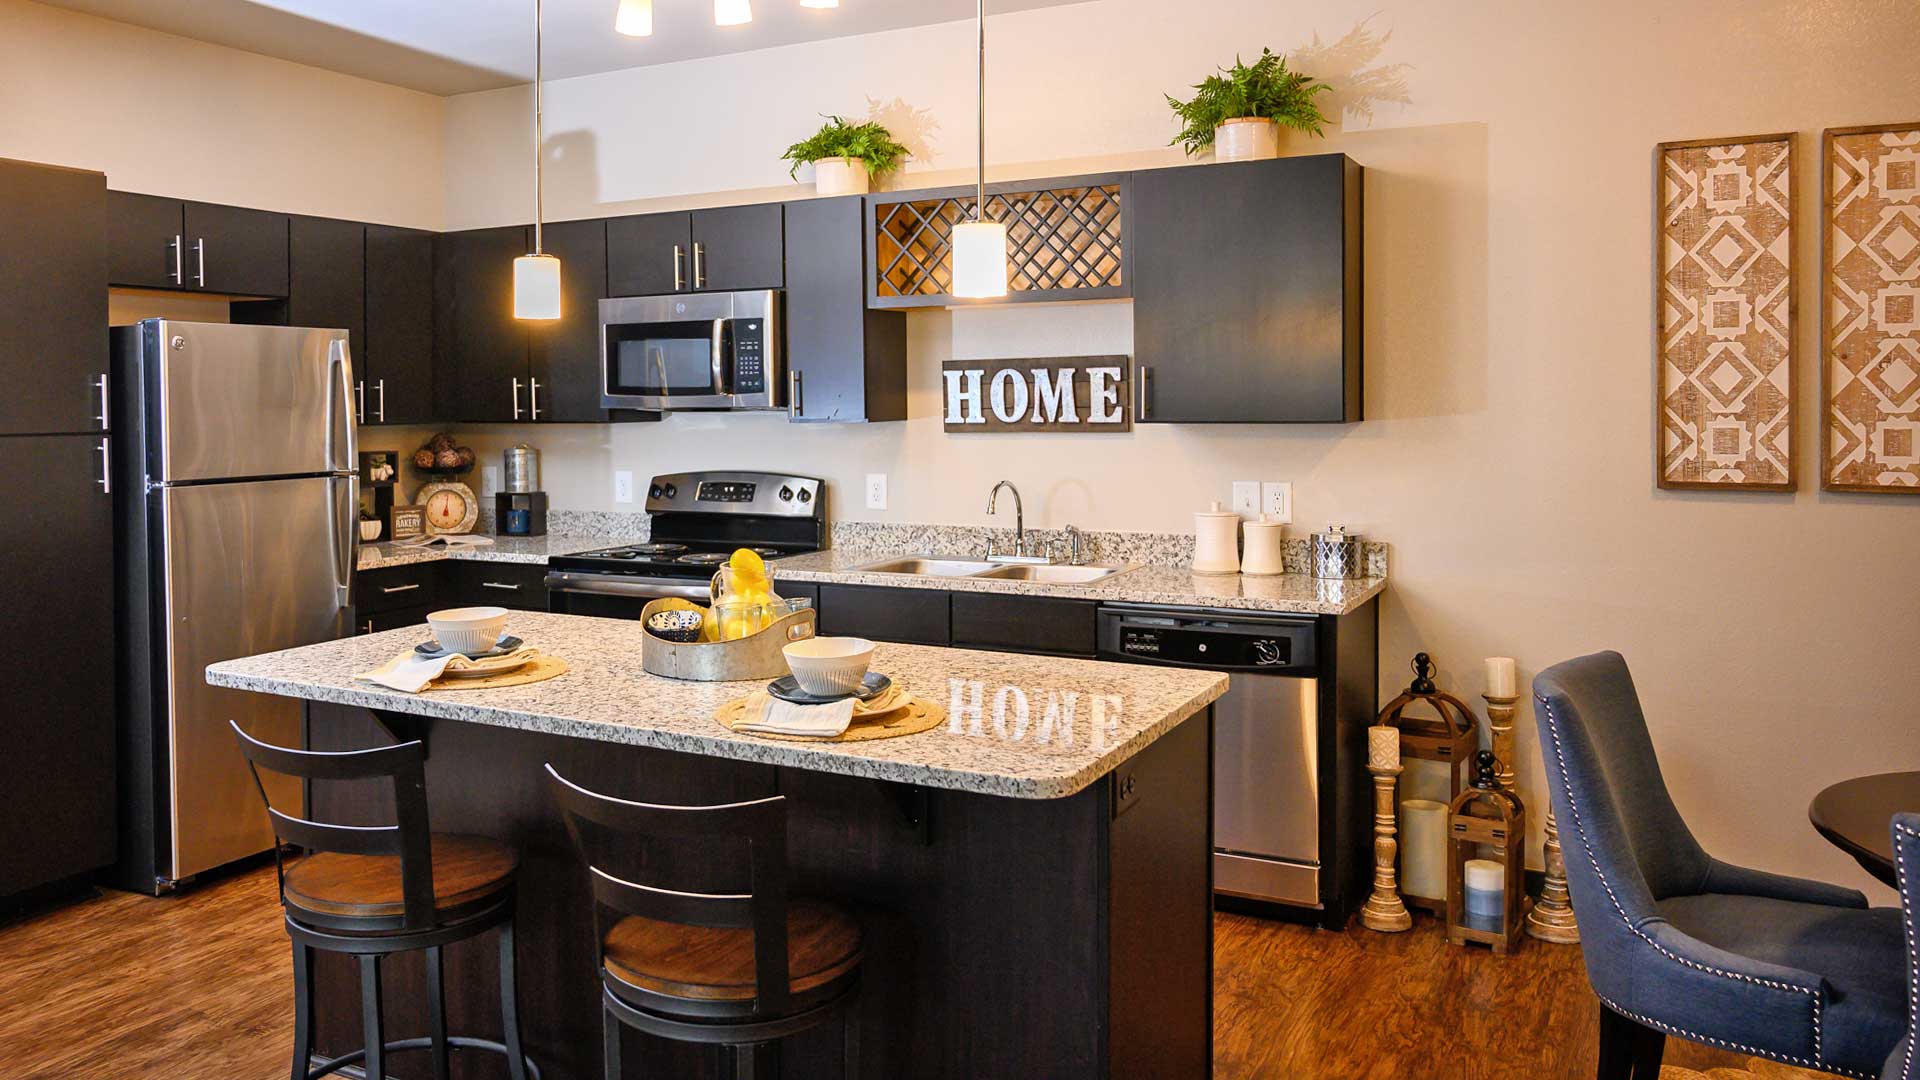 Luxury kitchens with granite countertops